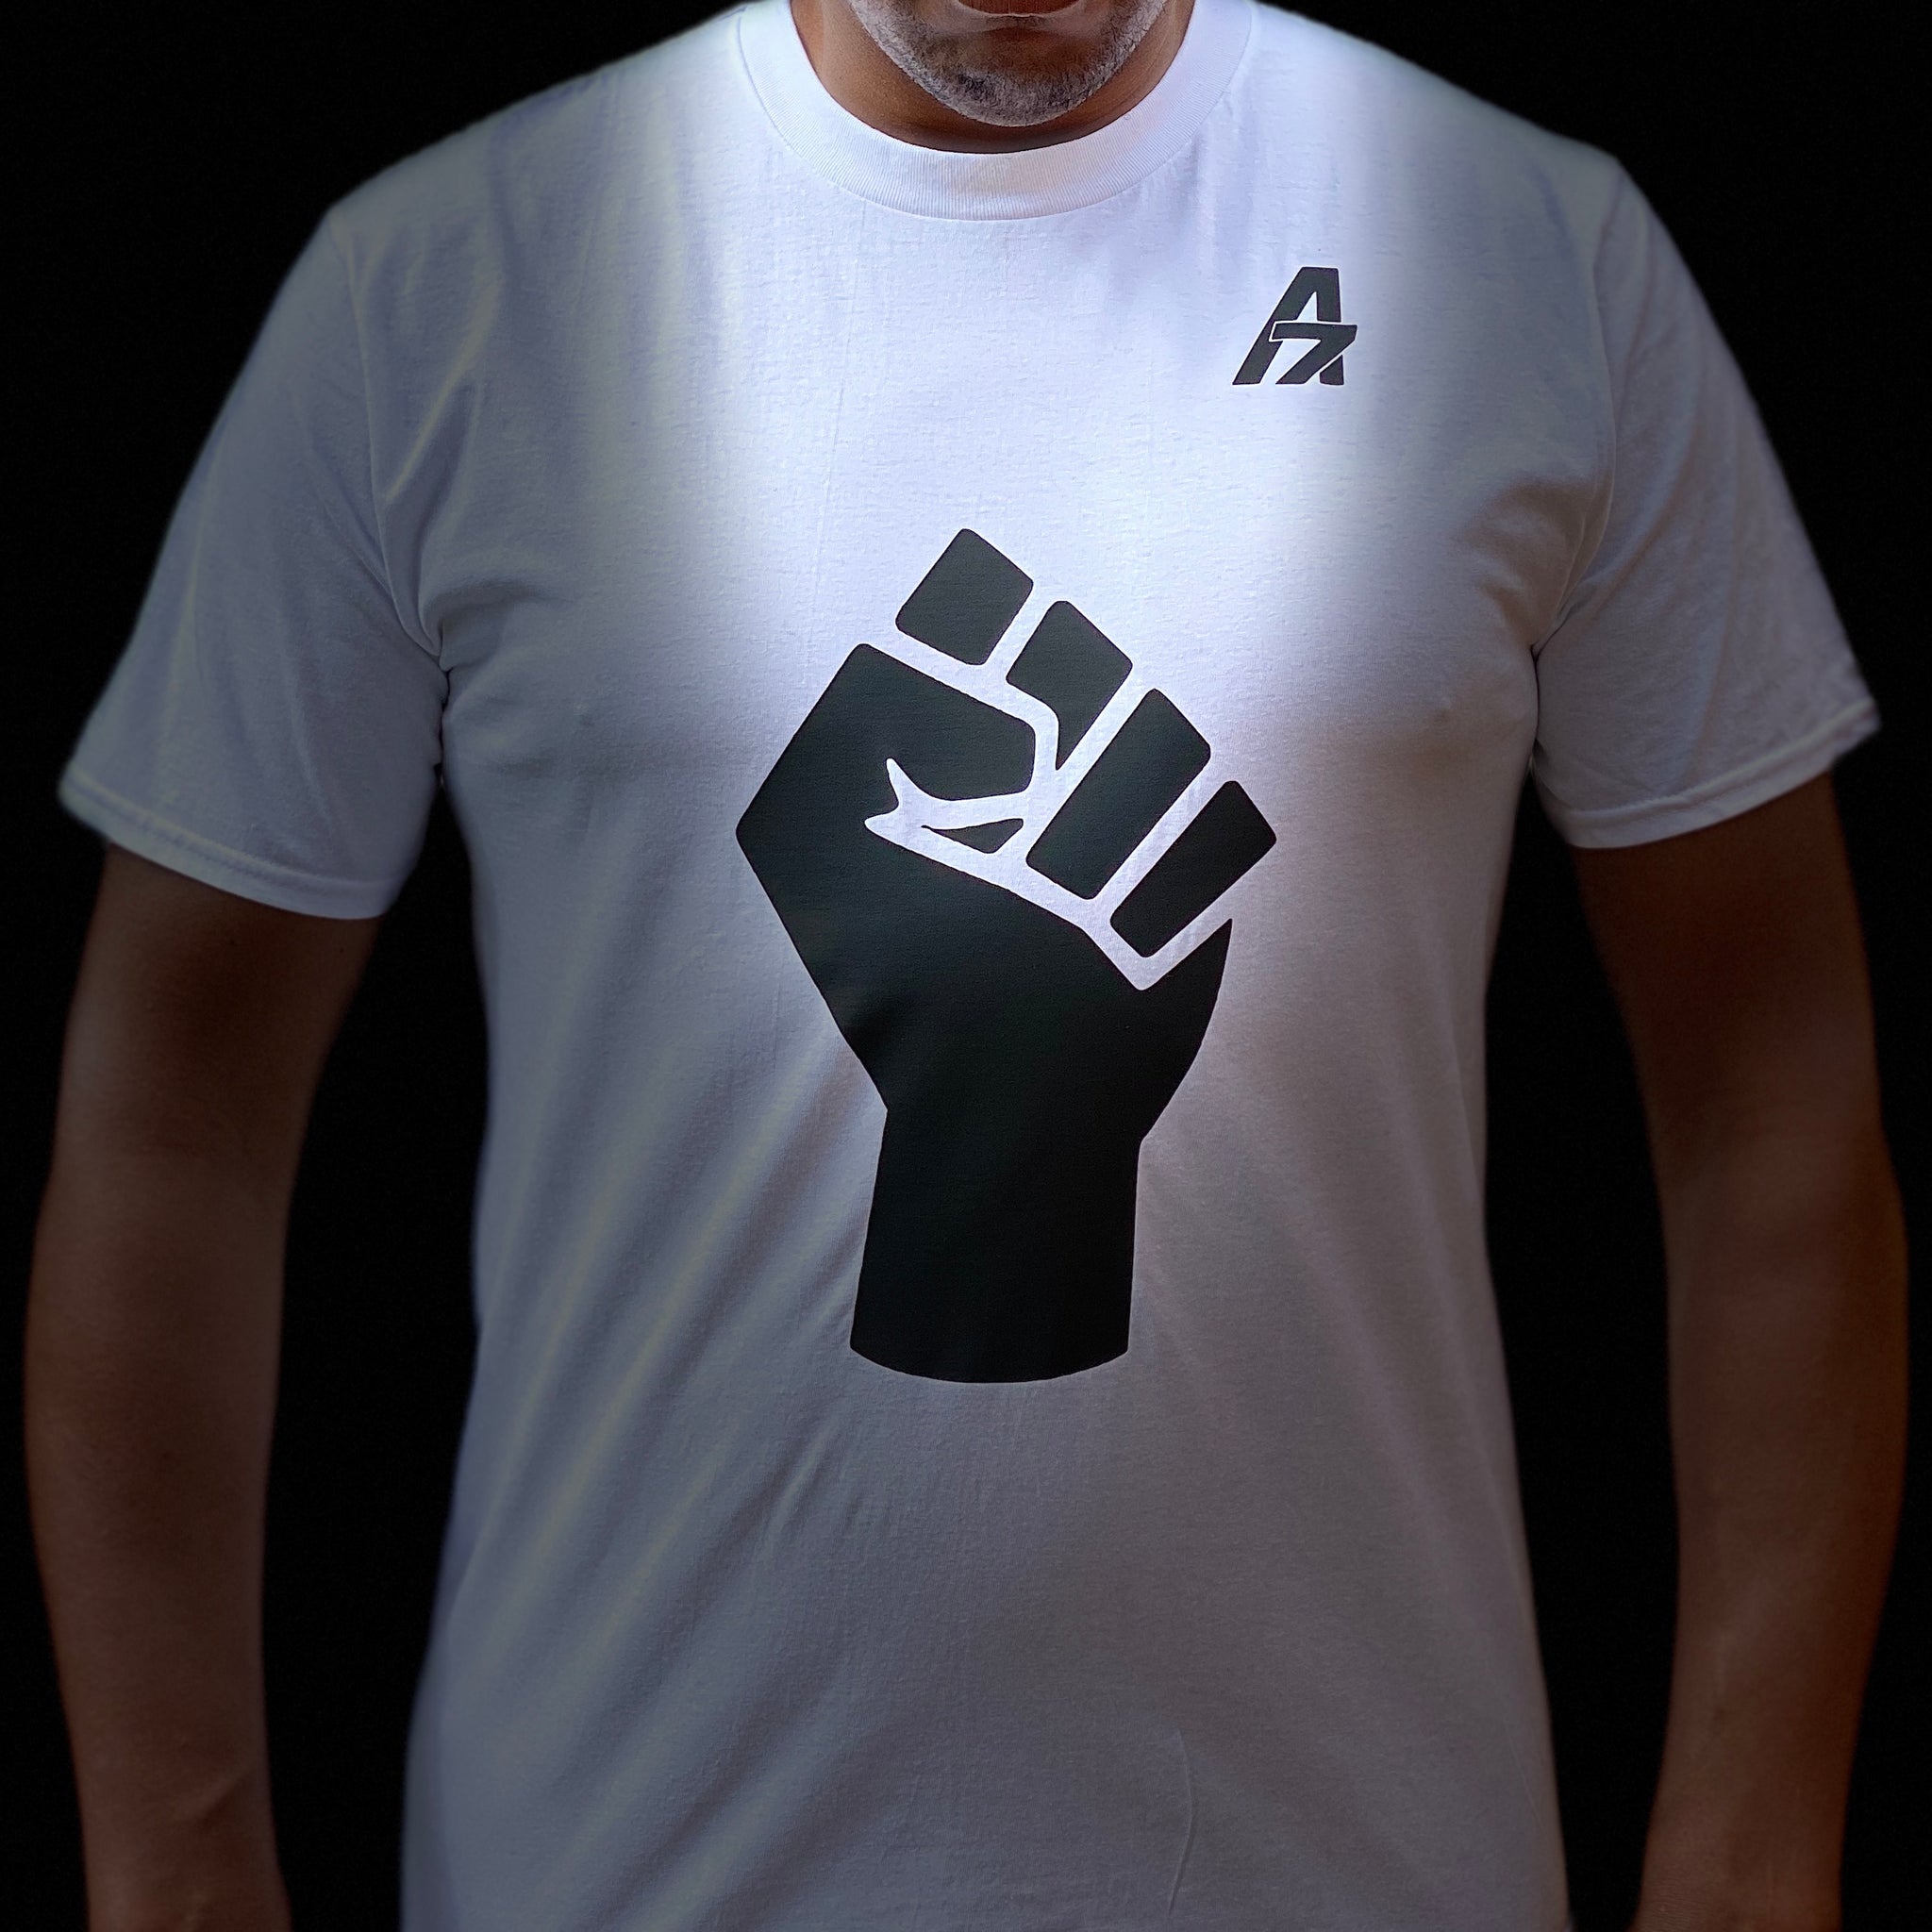 A7Asher "Black Lives Matter Fist " White T-Shirt, Black A7 Logo